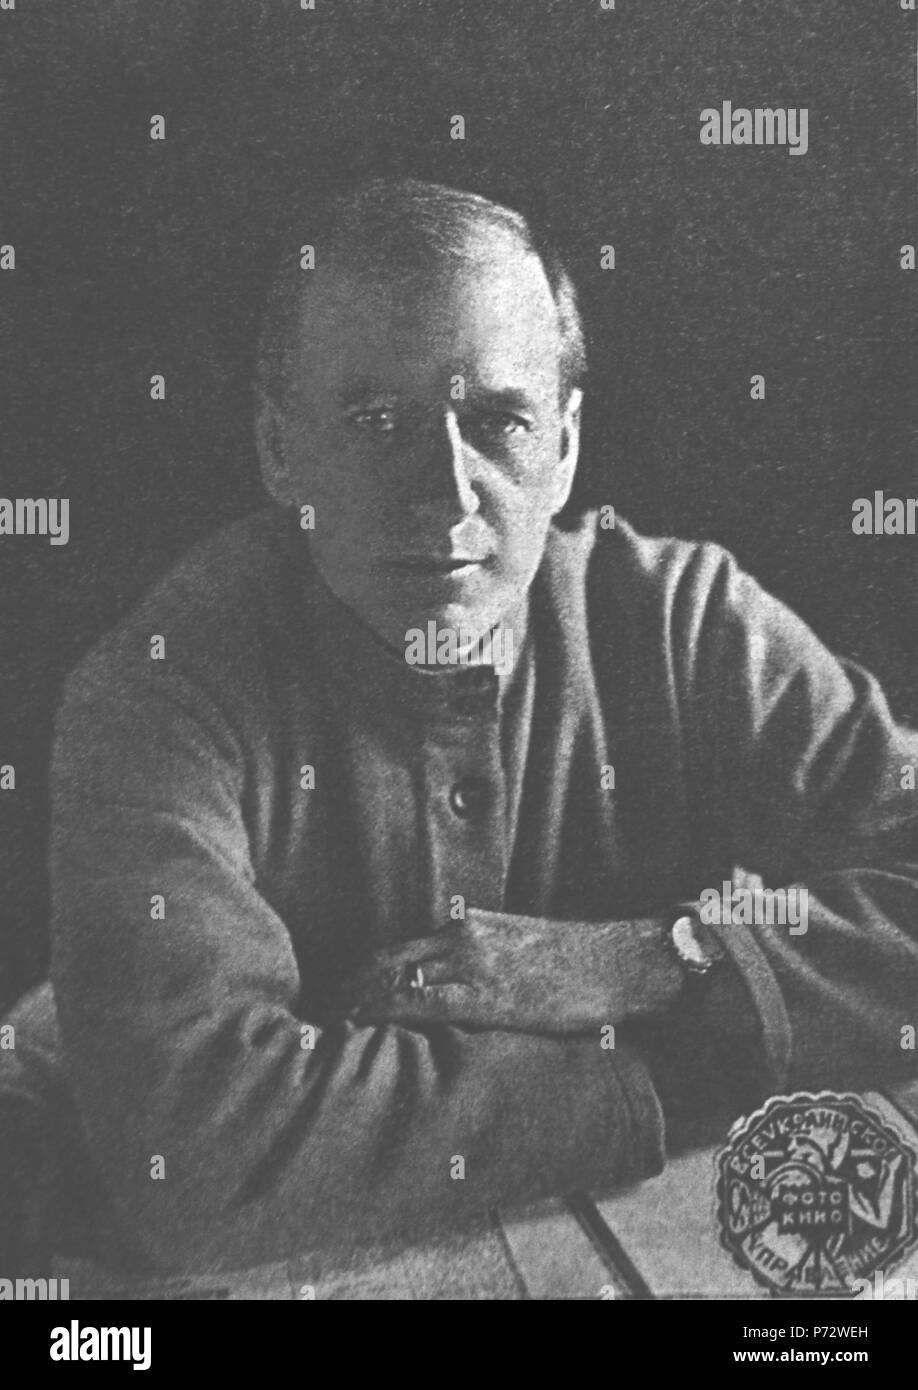 English: Christian Rakovsky 1923, First Chairman of the Council of People's Commissars (Prime Minister) of the Ukrainian SSR. :   1923      ('-) . 1 December 1923 2 Christian Rakovsky 1923 Stock Photo